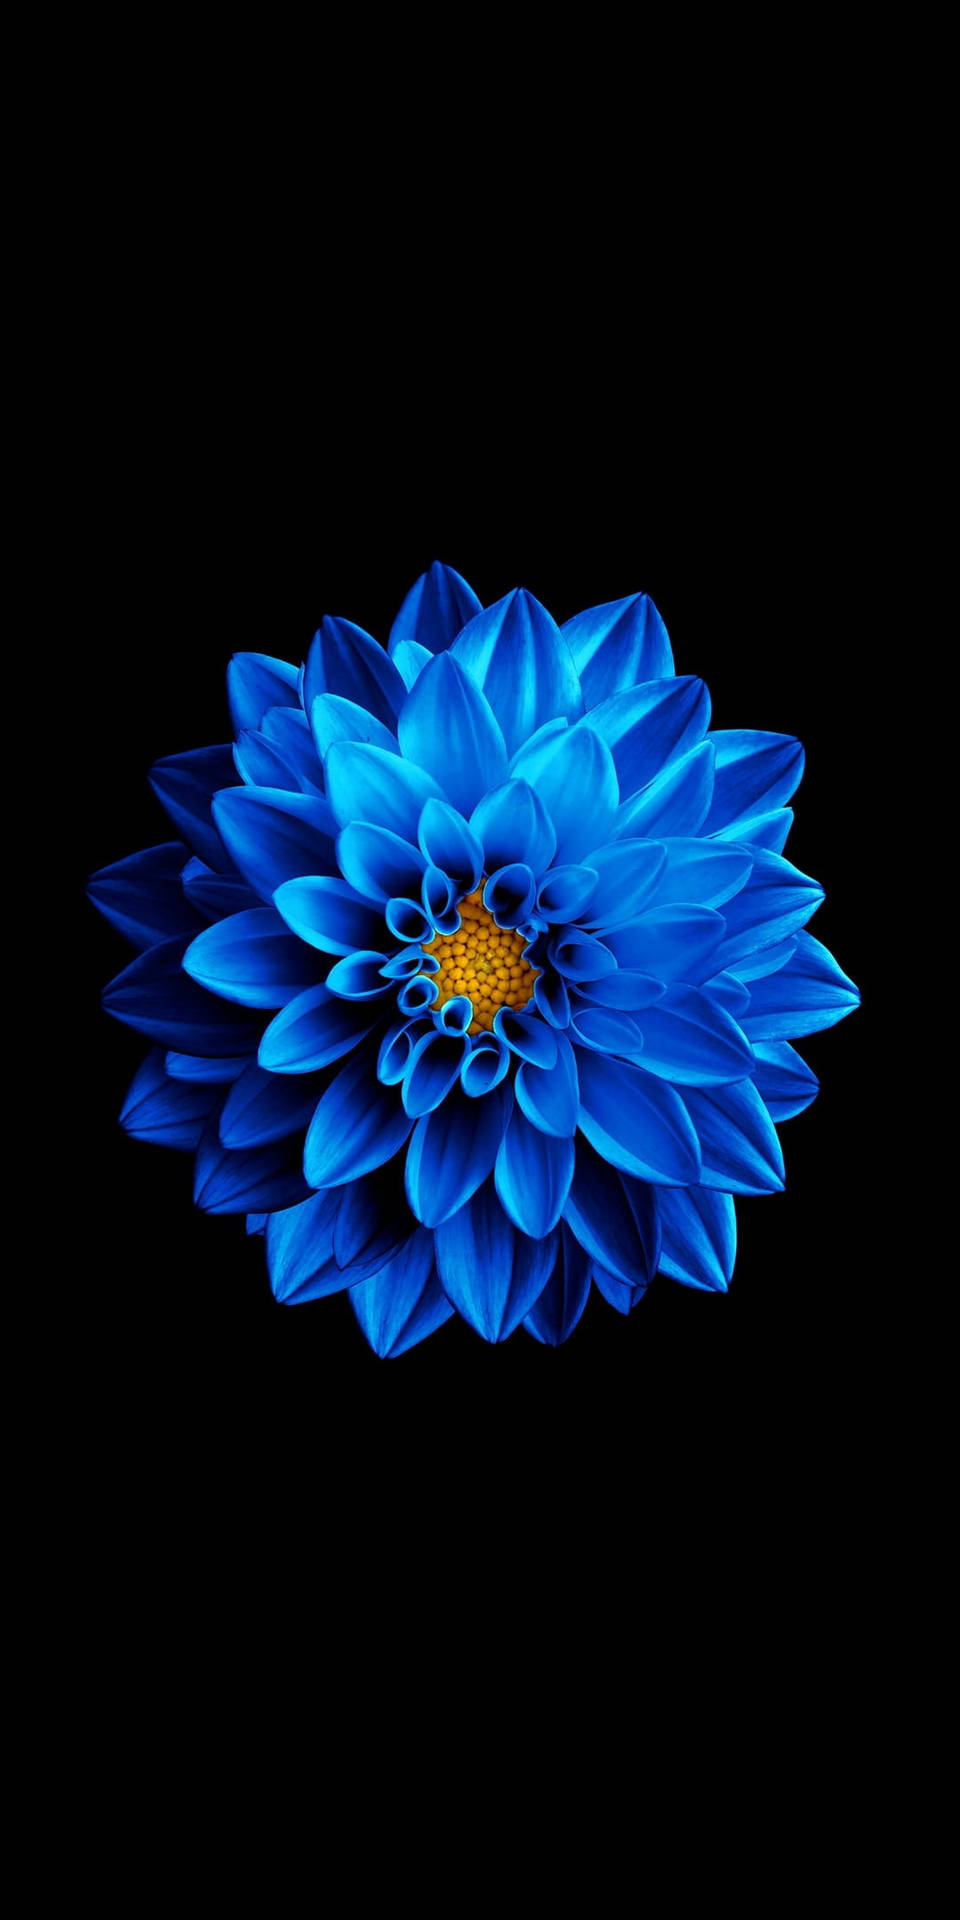 Amoled Android Blue Flower Background